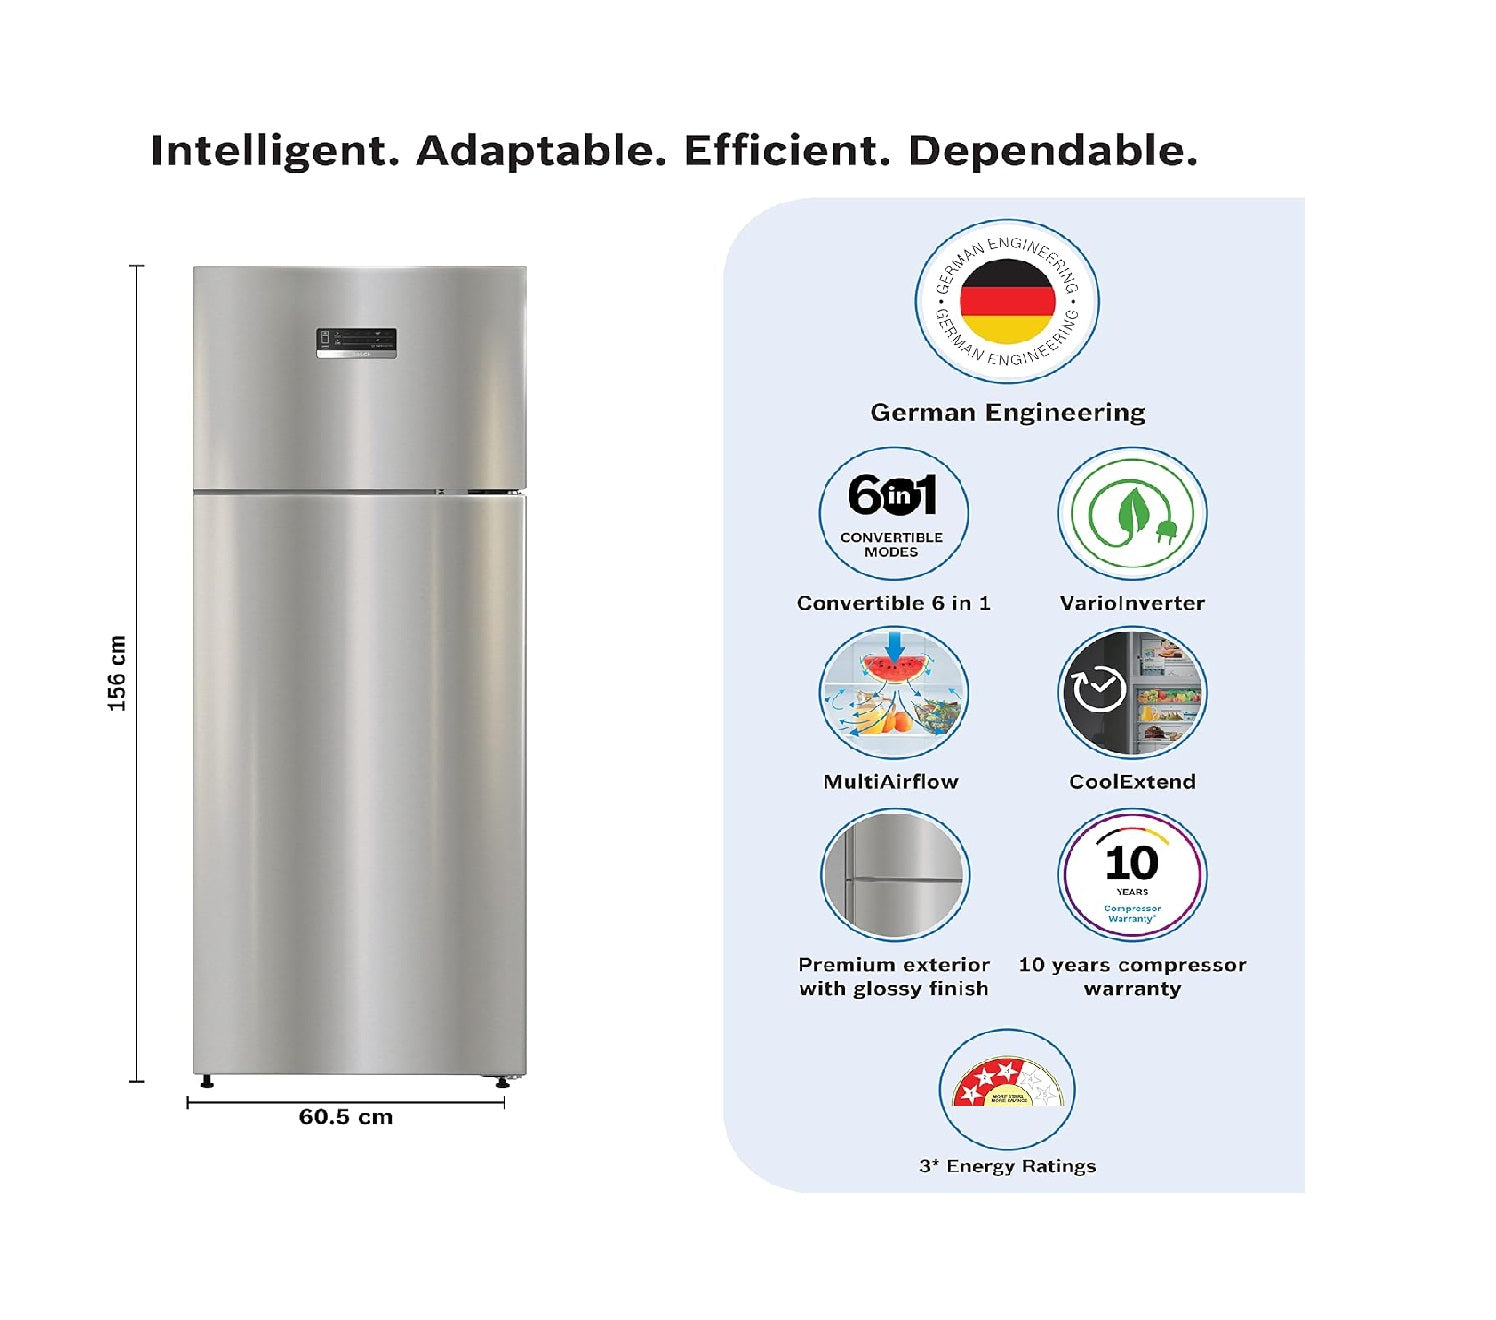 Bosch CTC27S031I 243L Frost Free Refrigerator (Silver Inox)